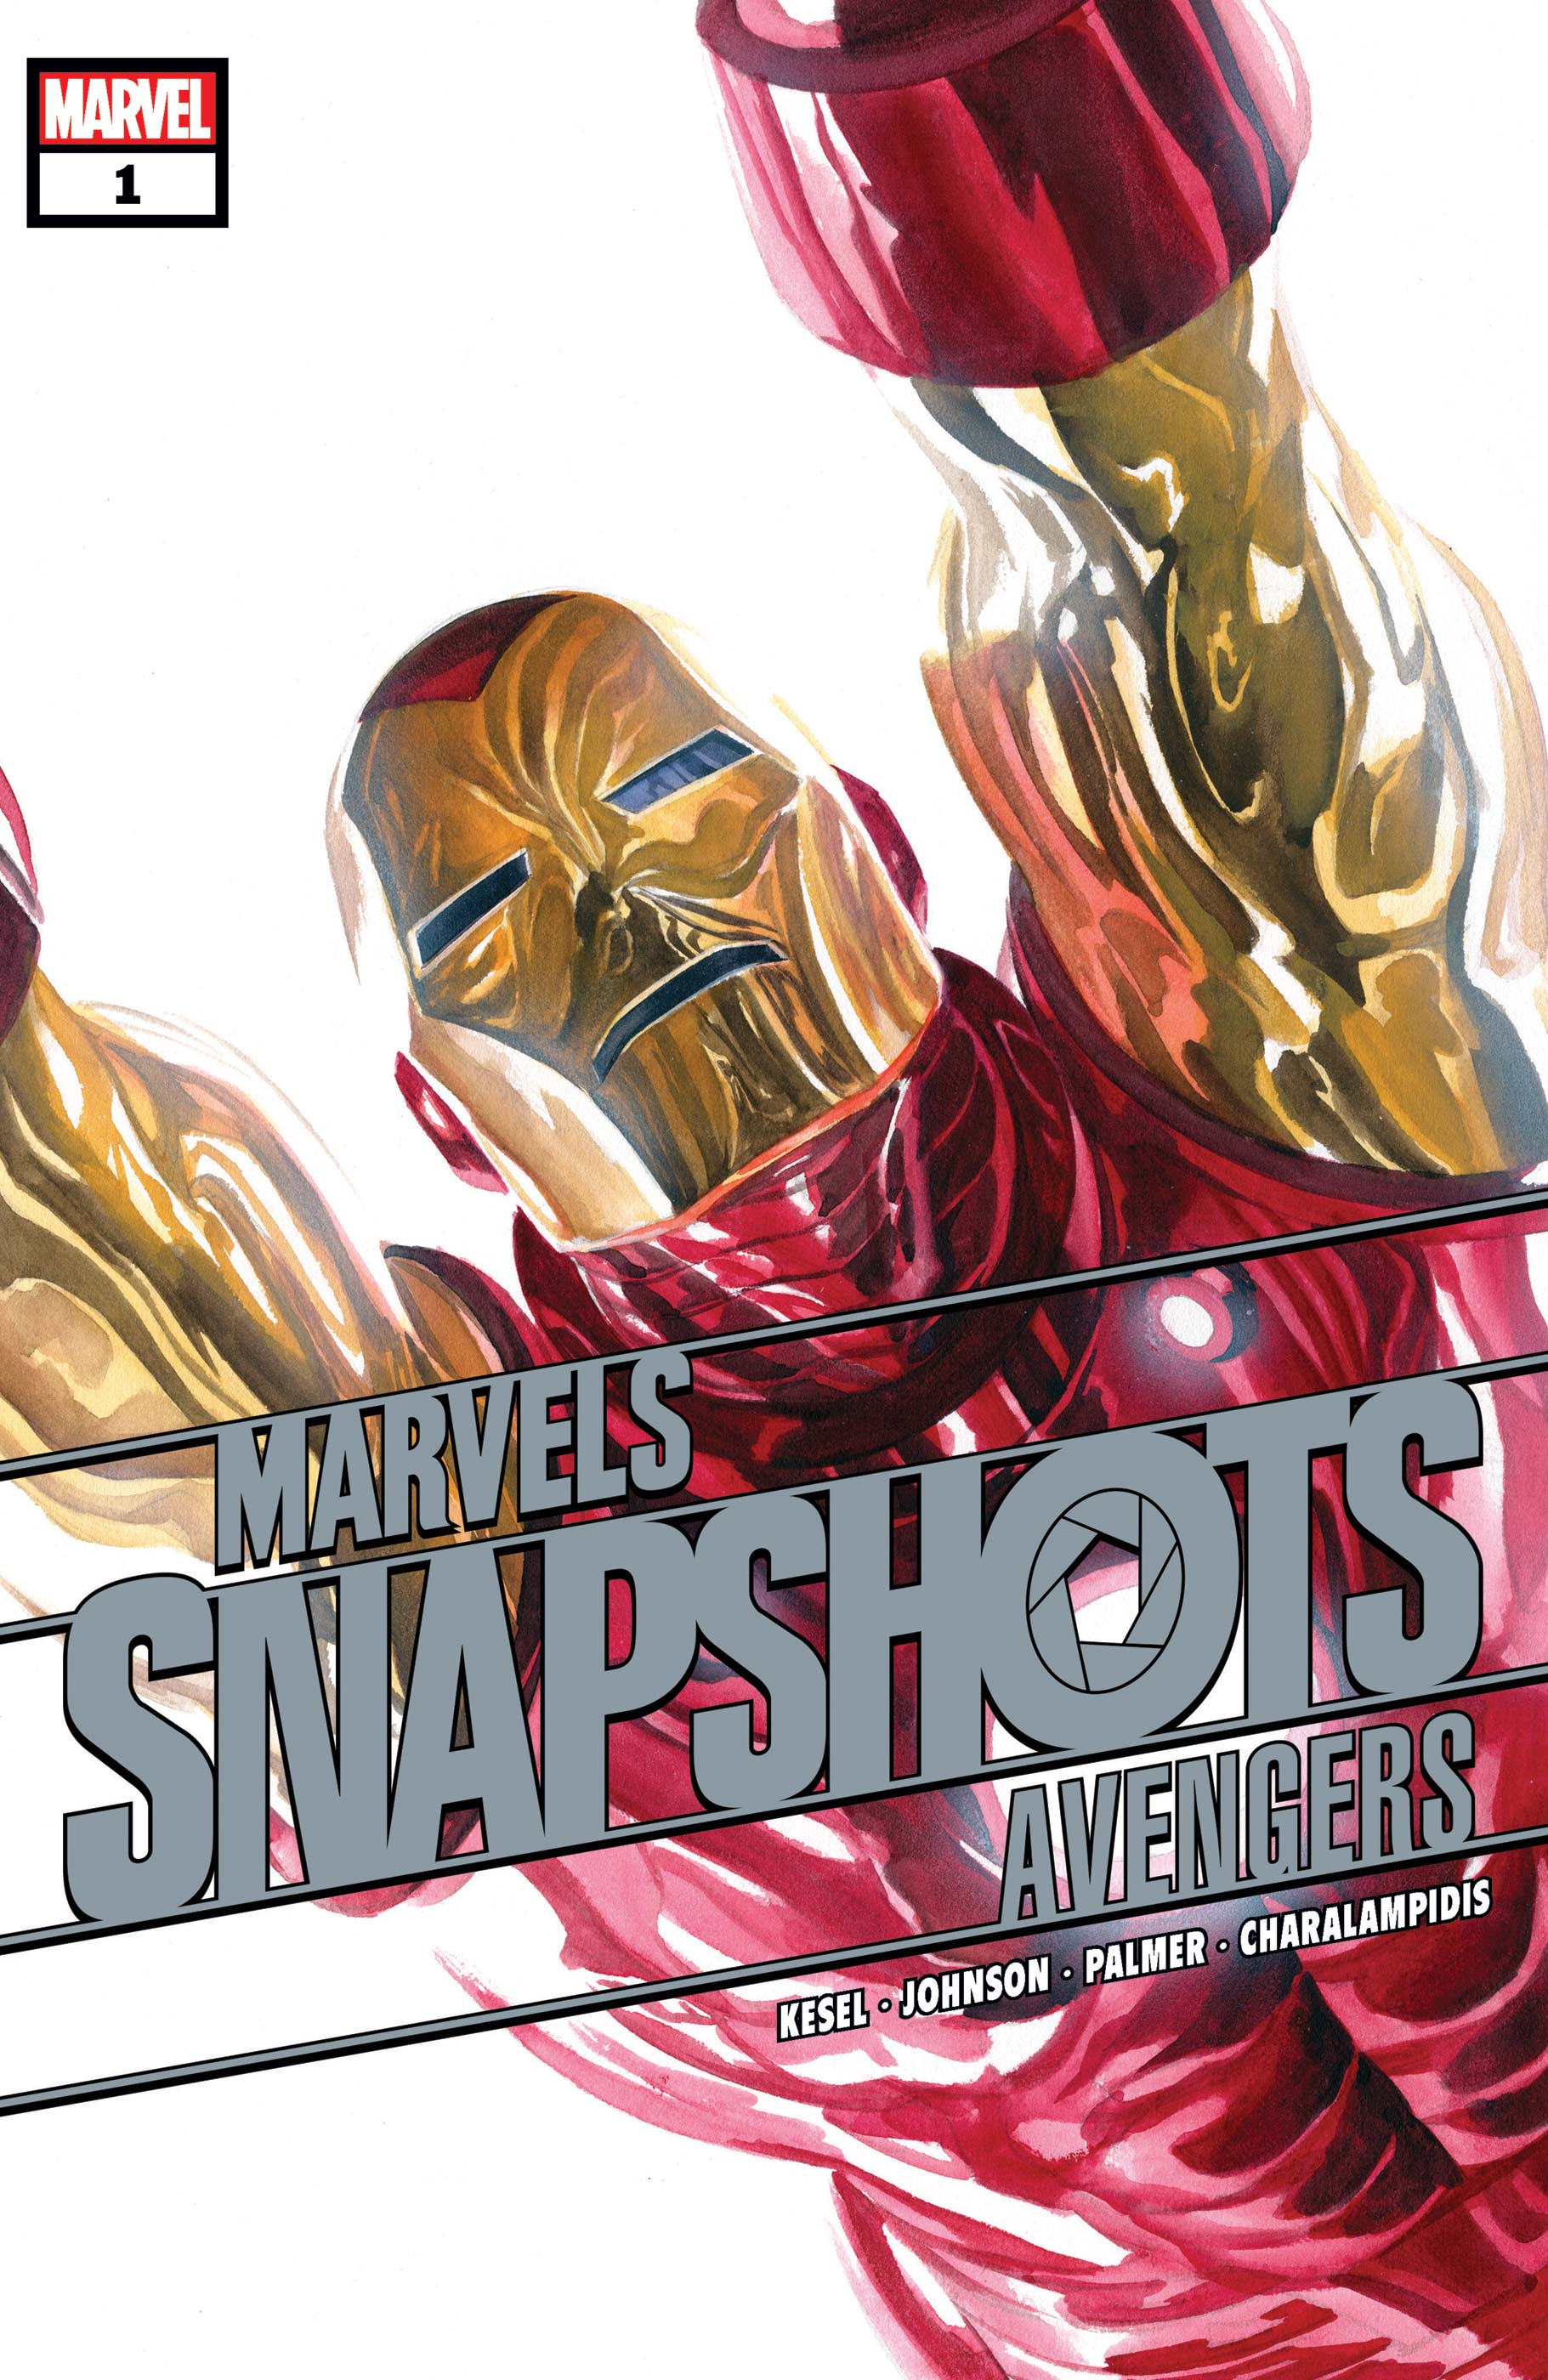 Avengers: Marvels Snapshots (2020) #1